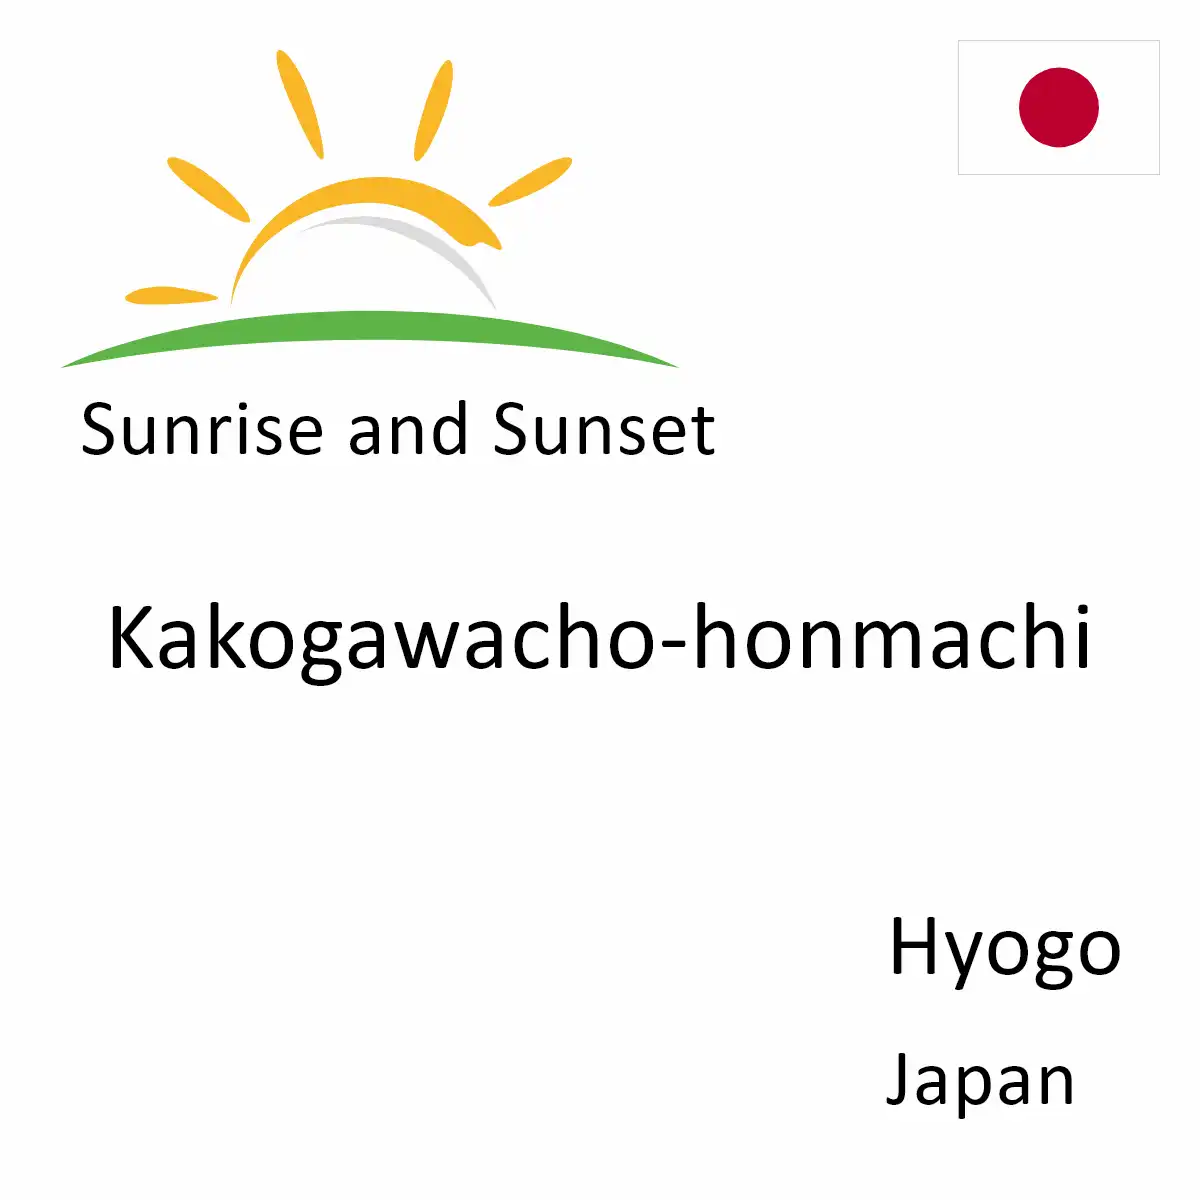 Kakogawachō-honmachi tourism